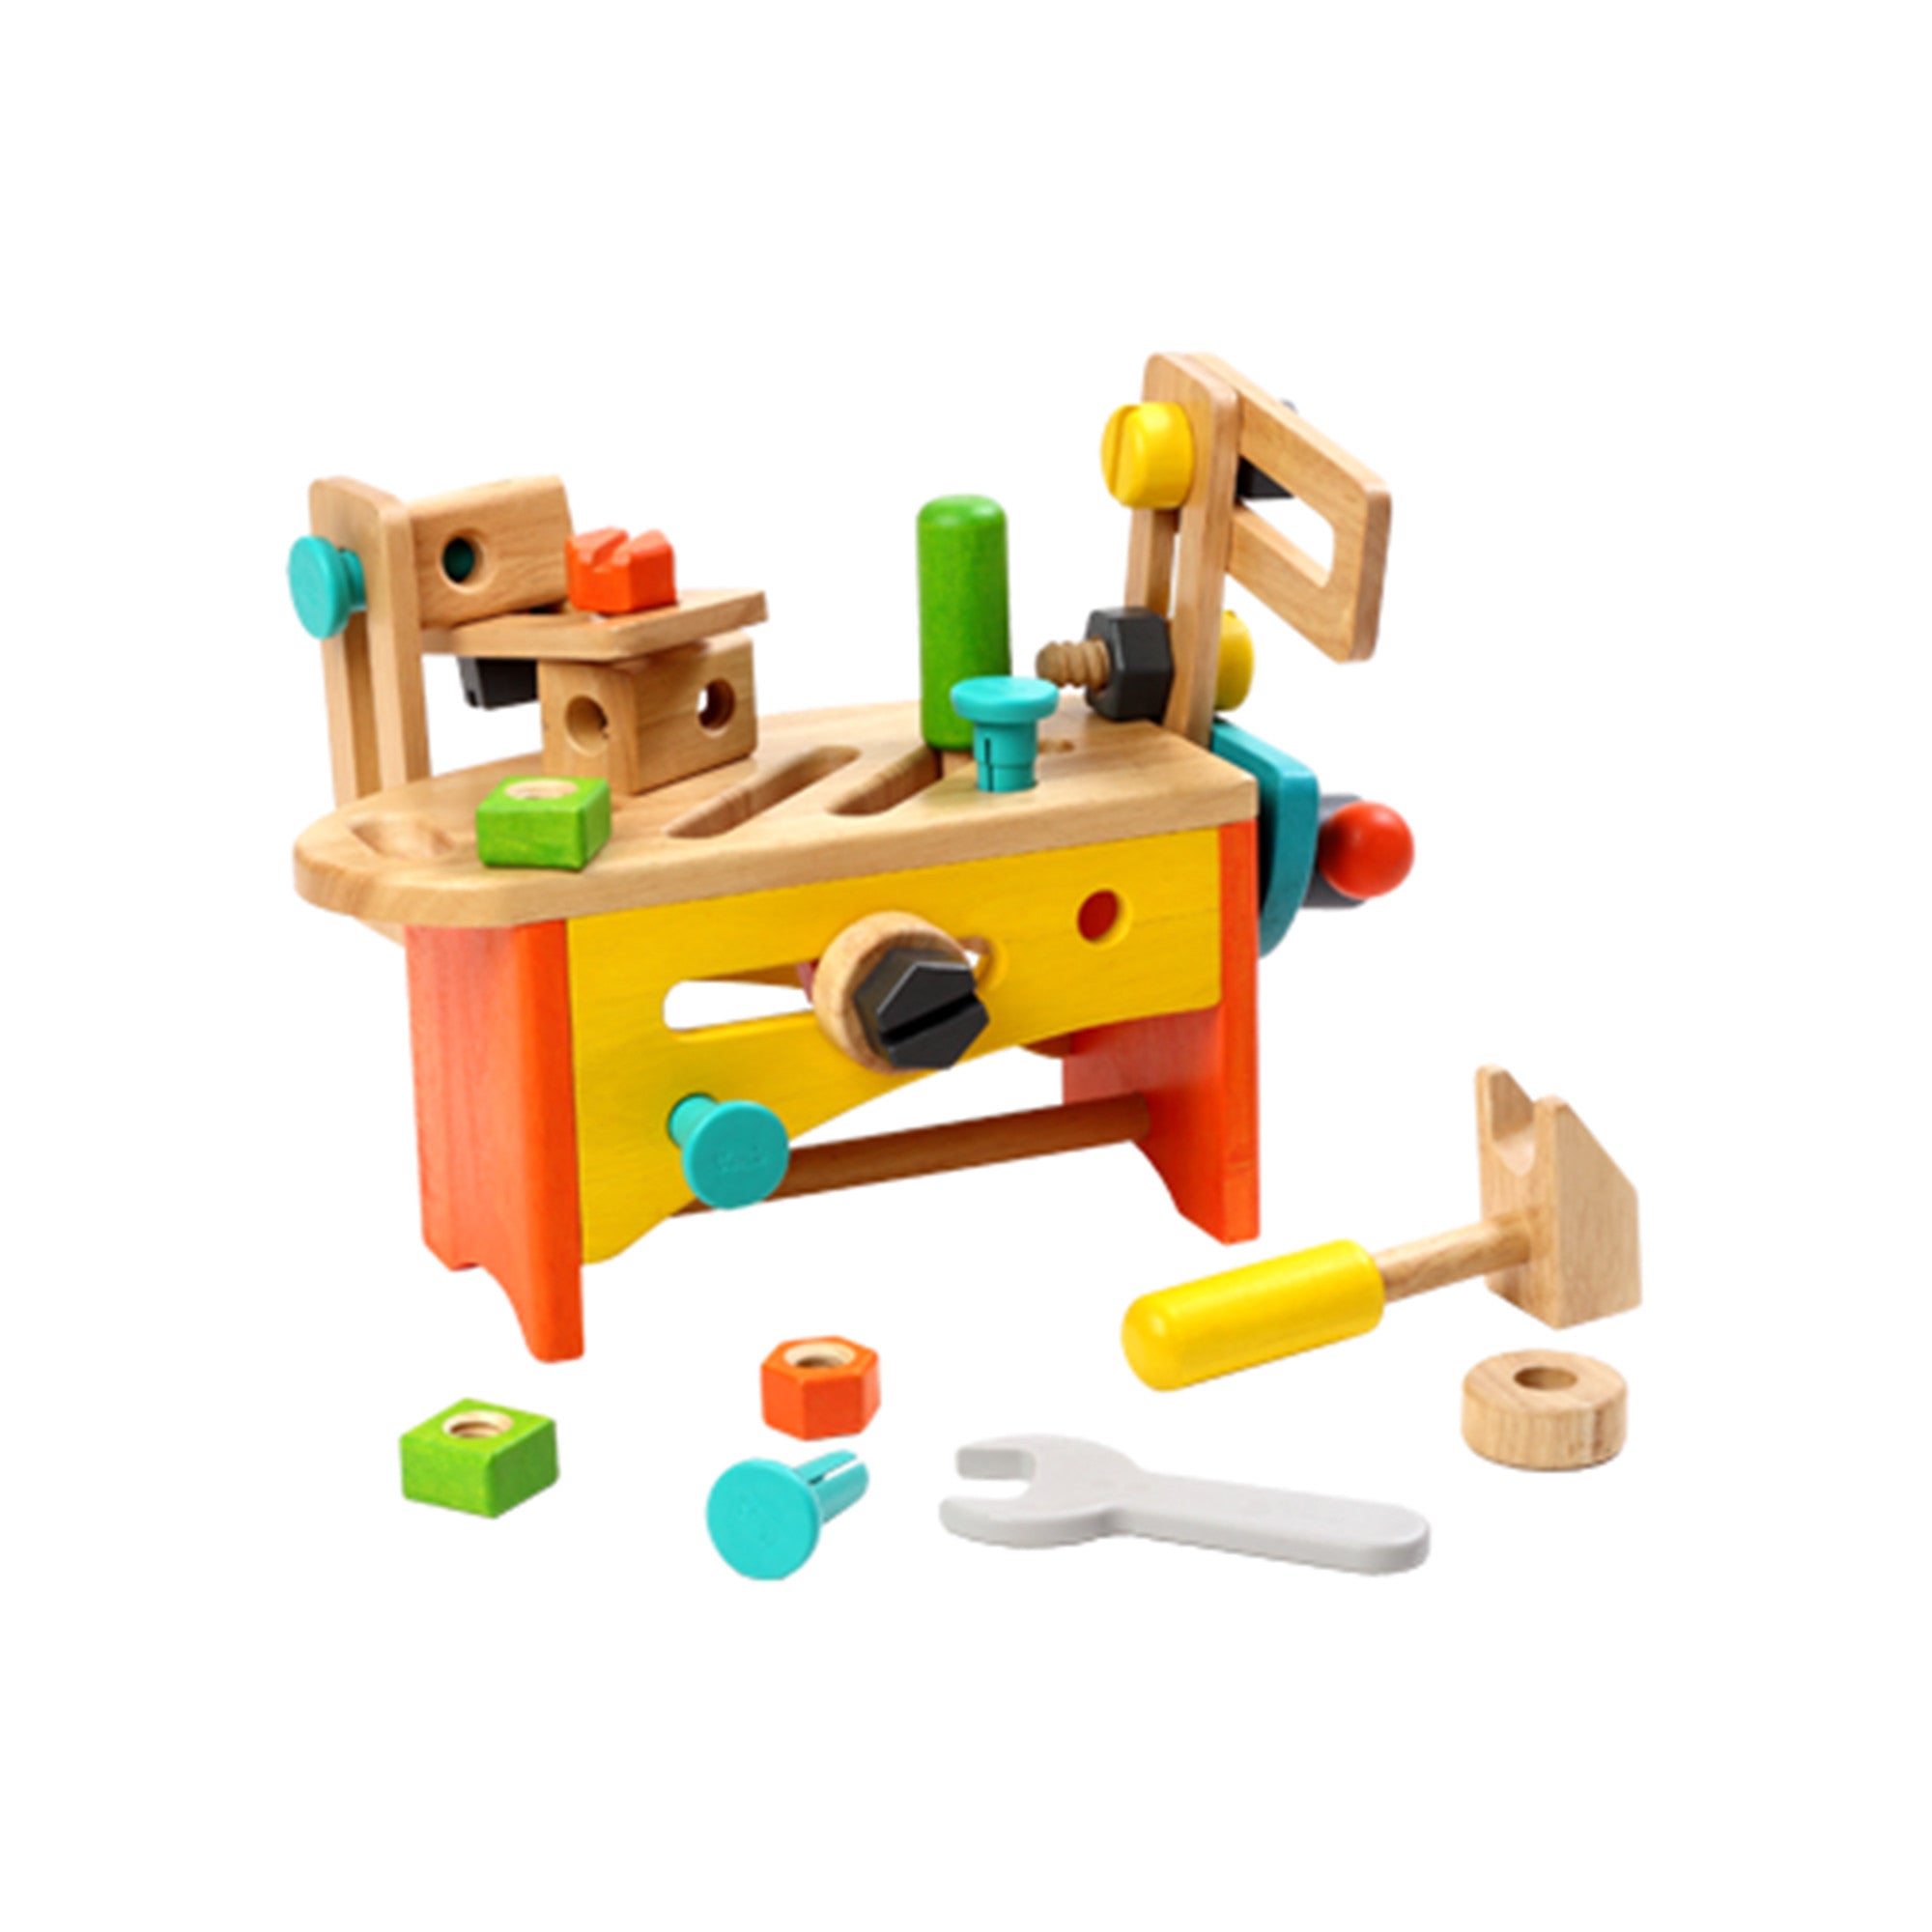 tool box set toy